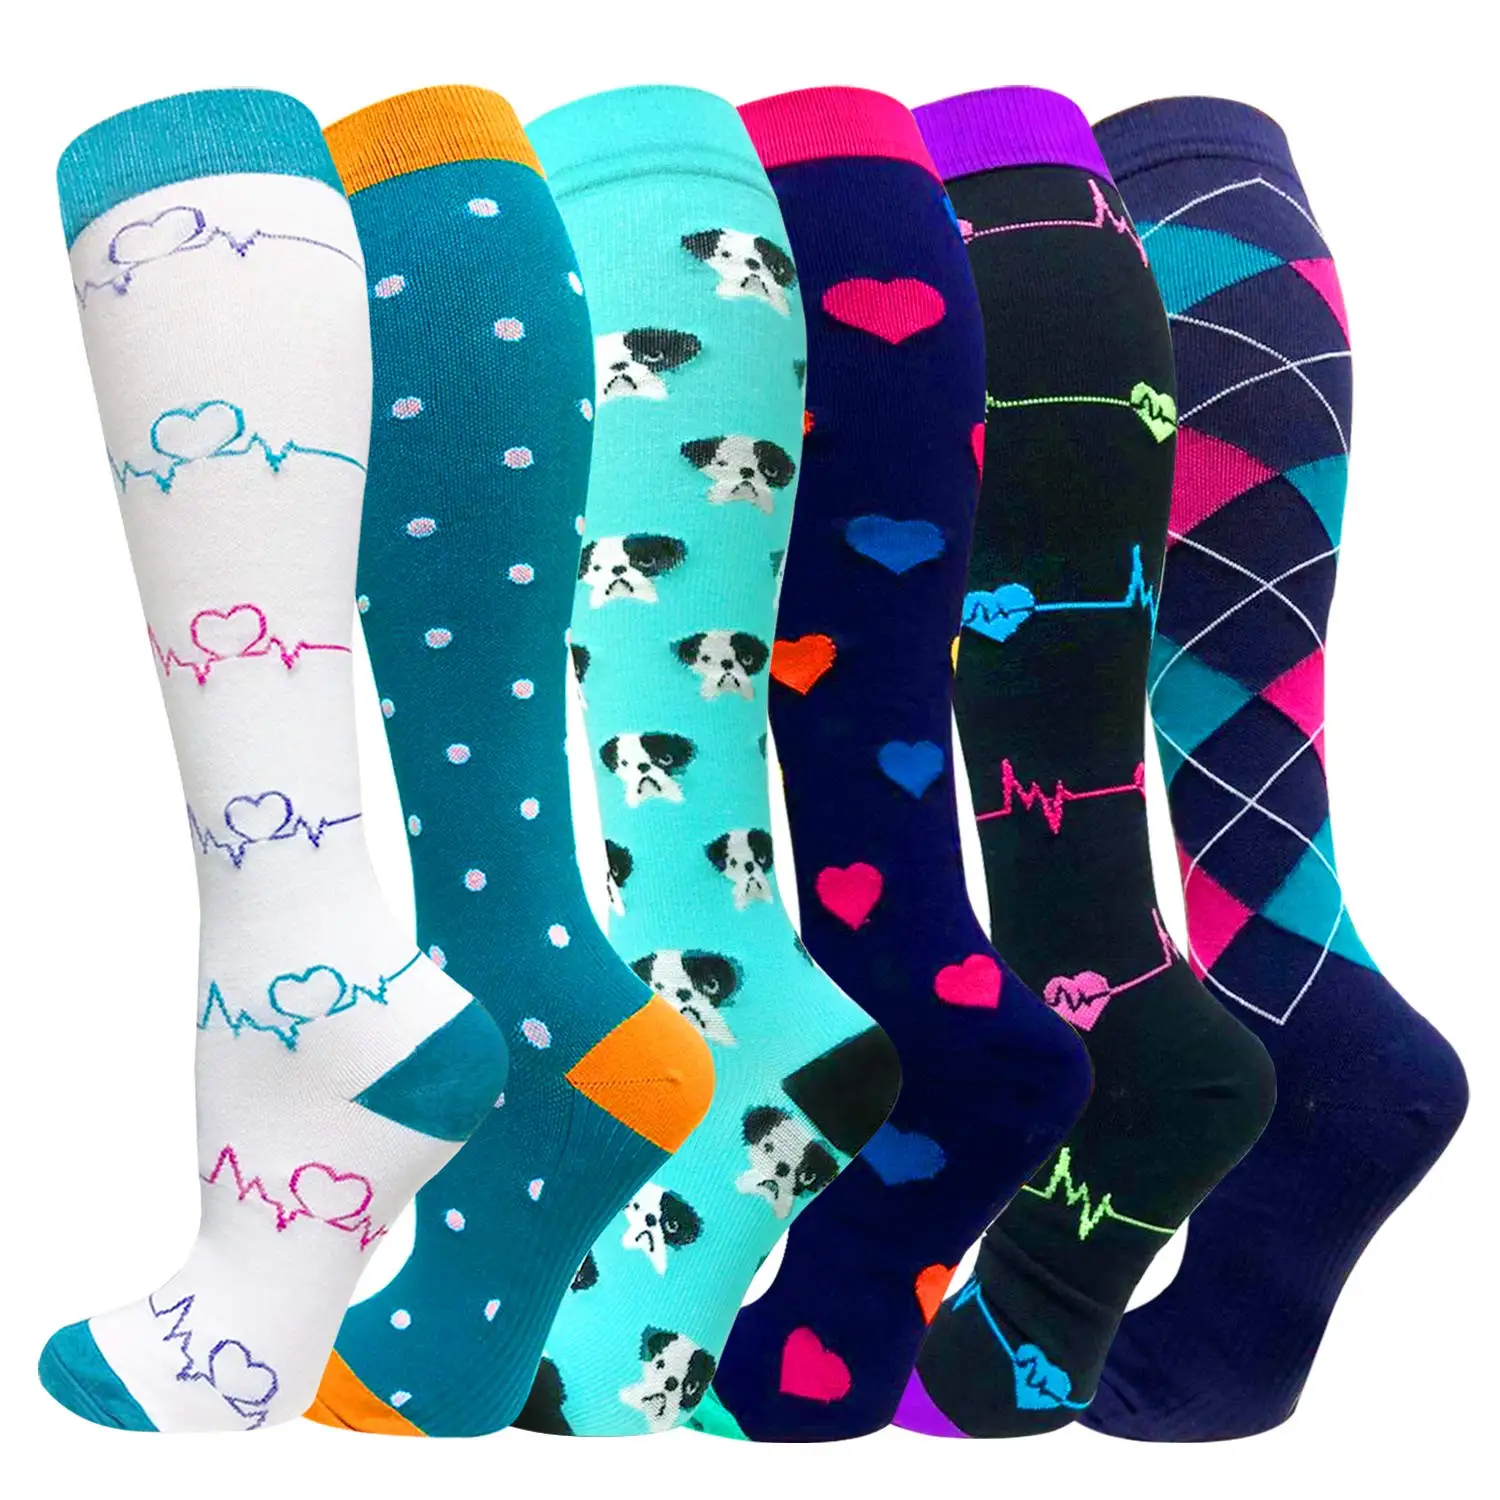 3/6/7 Pairs Compression Socks for Women & Men Sport Nylon Socks Best for Running, Travel,Cycling,Pregnant,Nurse, Edema